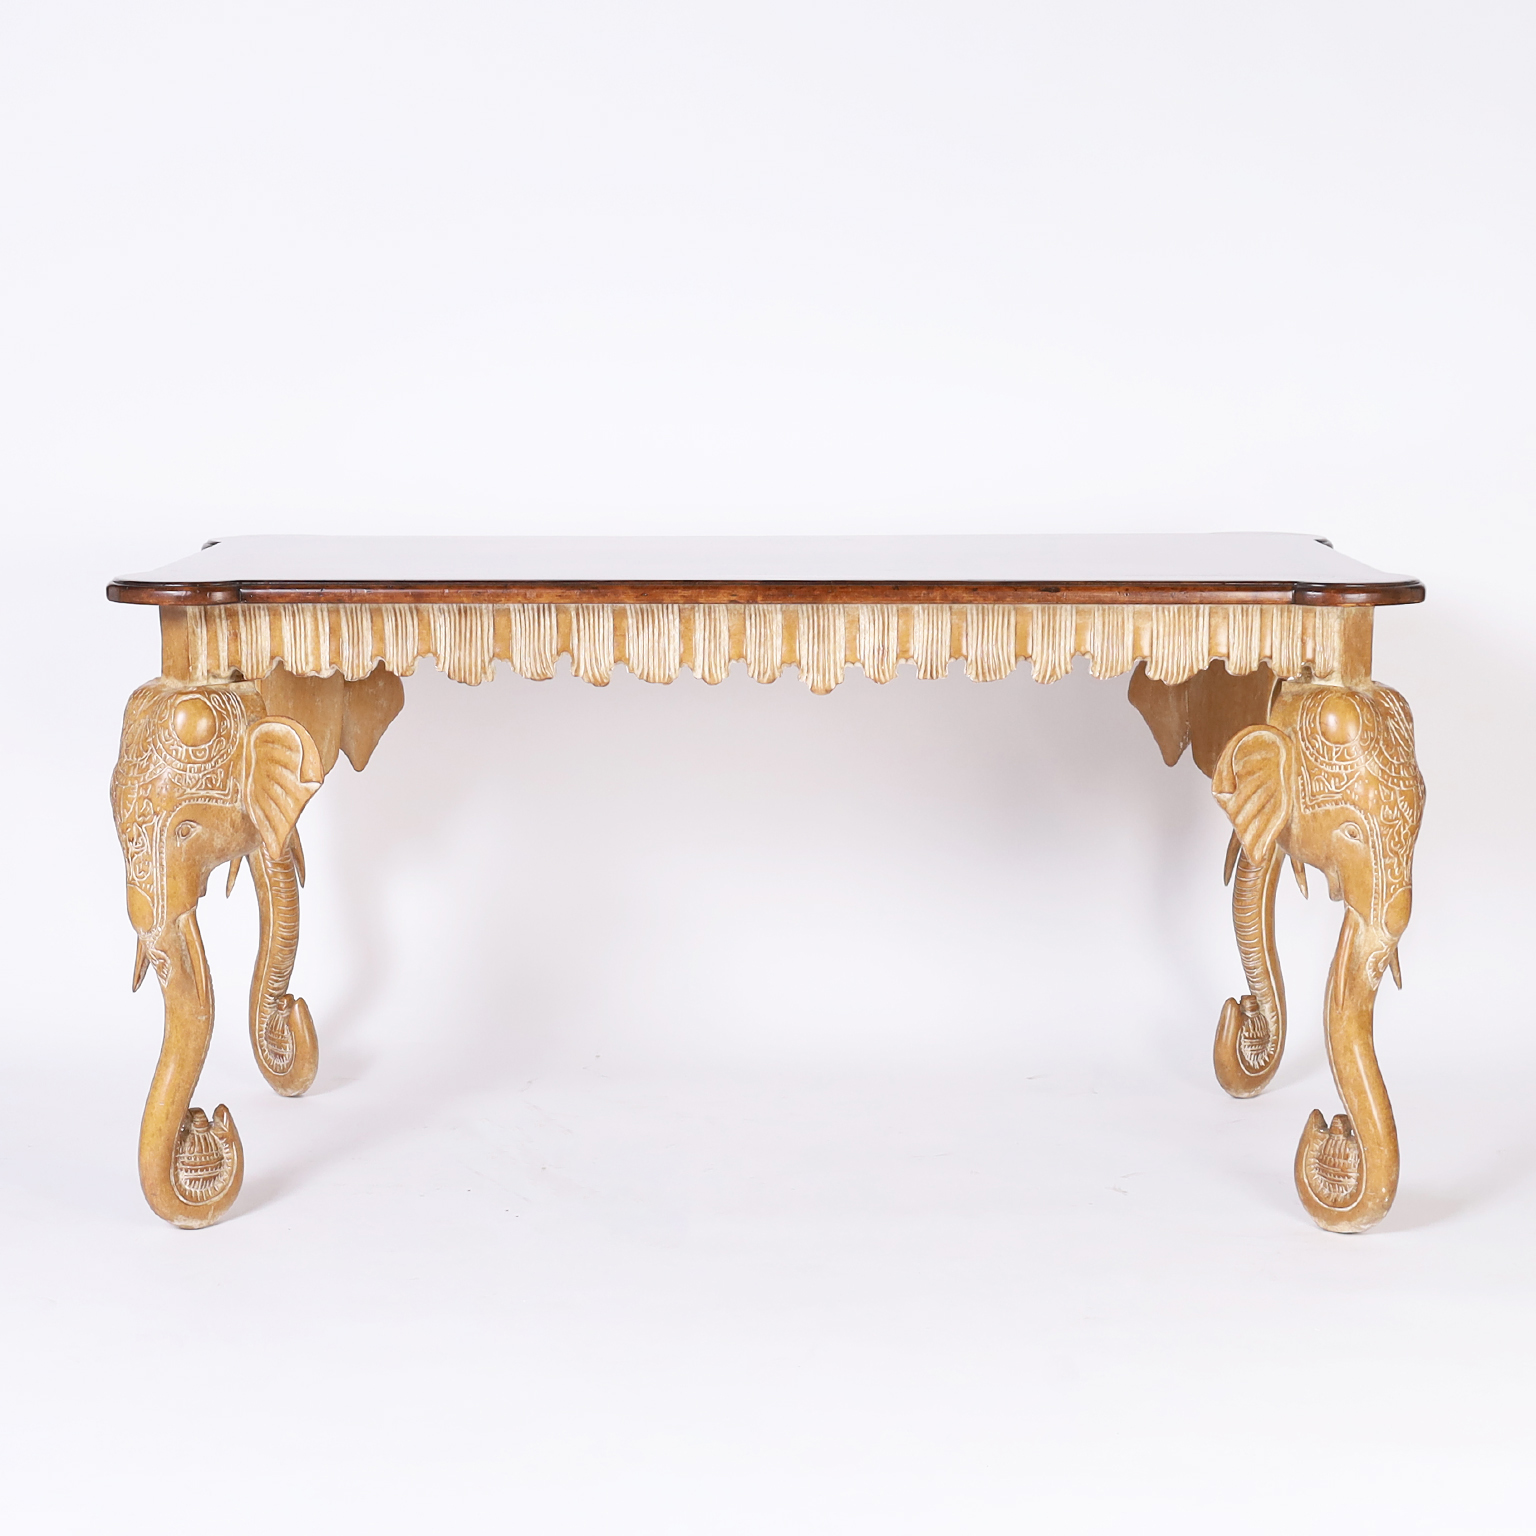 Mid Century Writing Table with Elephant Head legs